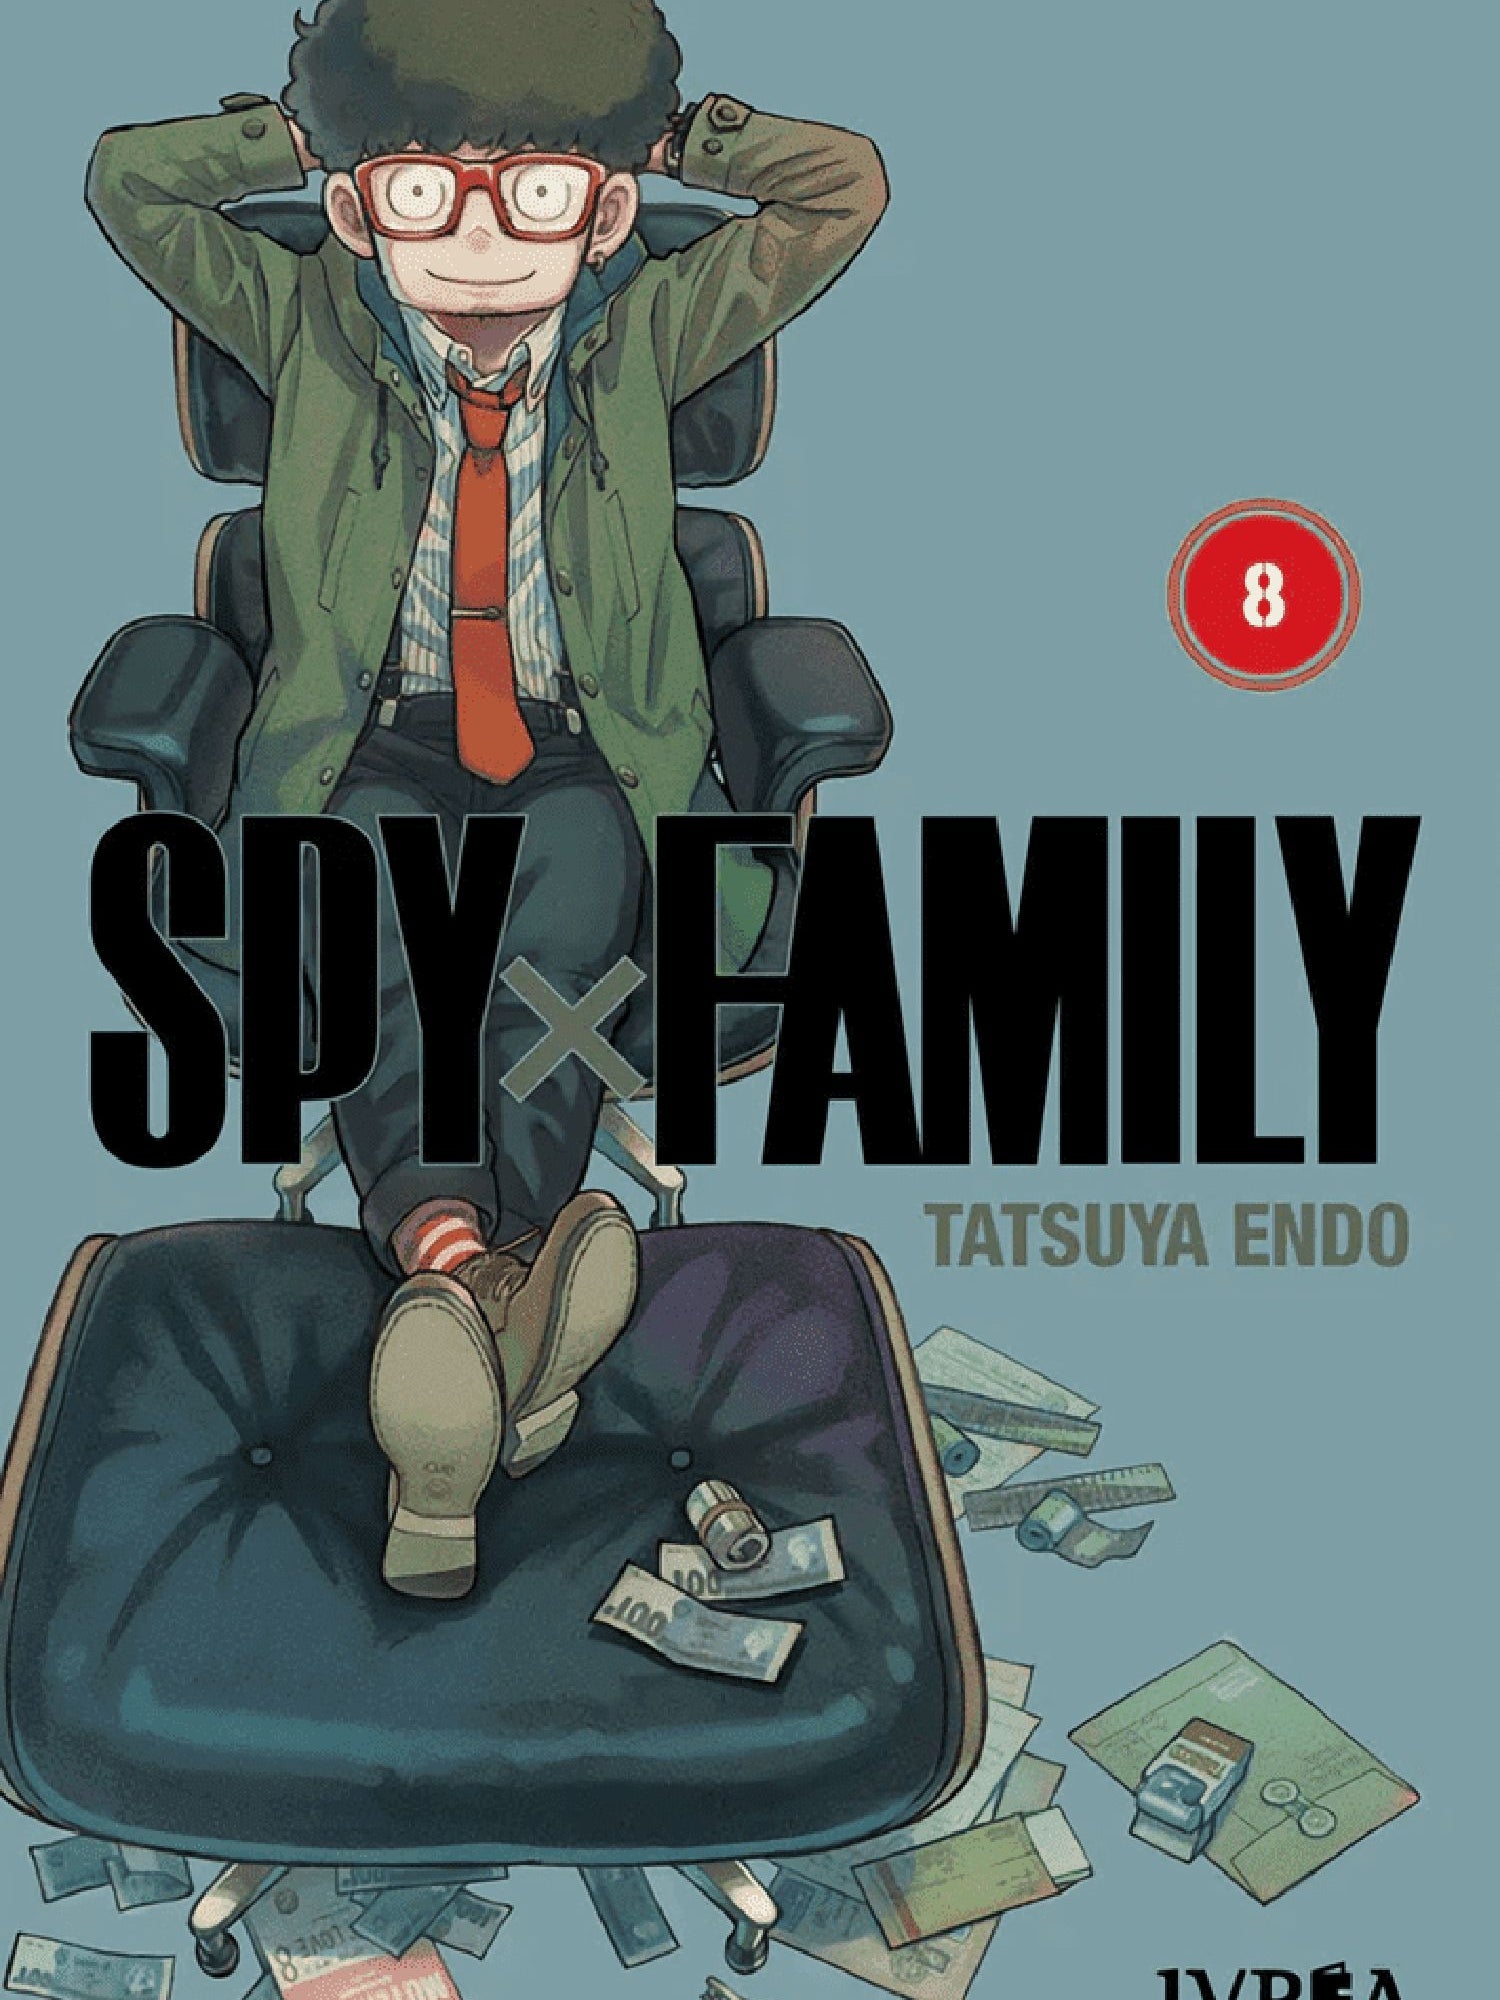 Spy x Family 8 Ivrea Argentina ENcuadrocomics